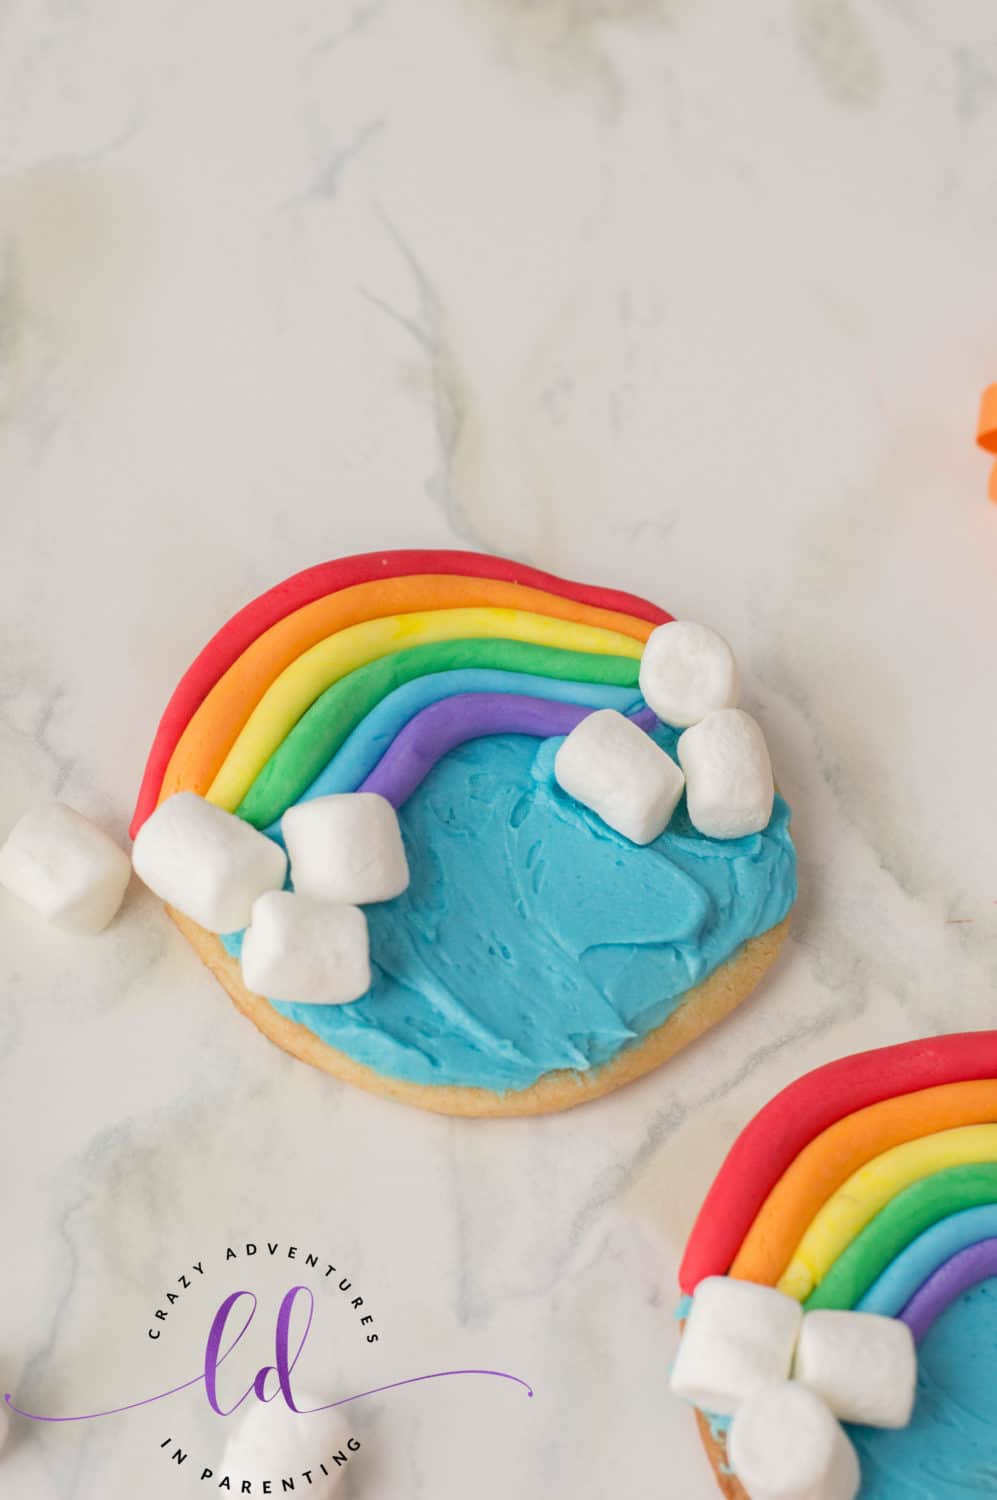 How to Make Rainbow Cookies using Fondant